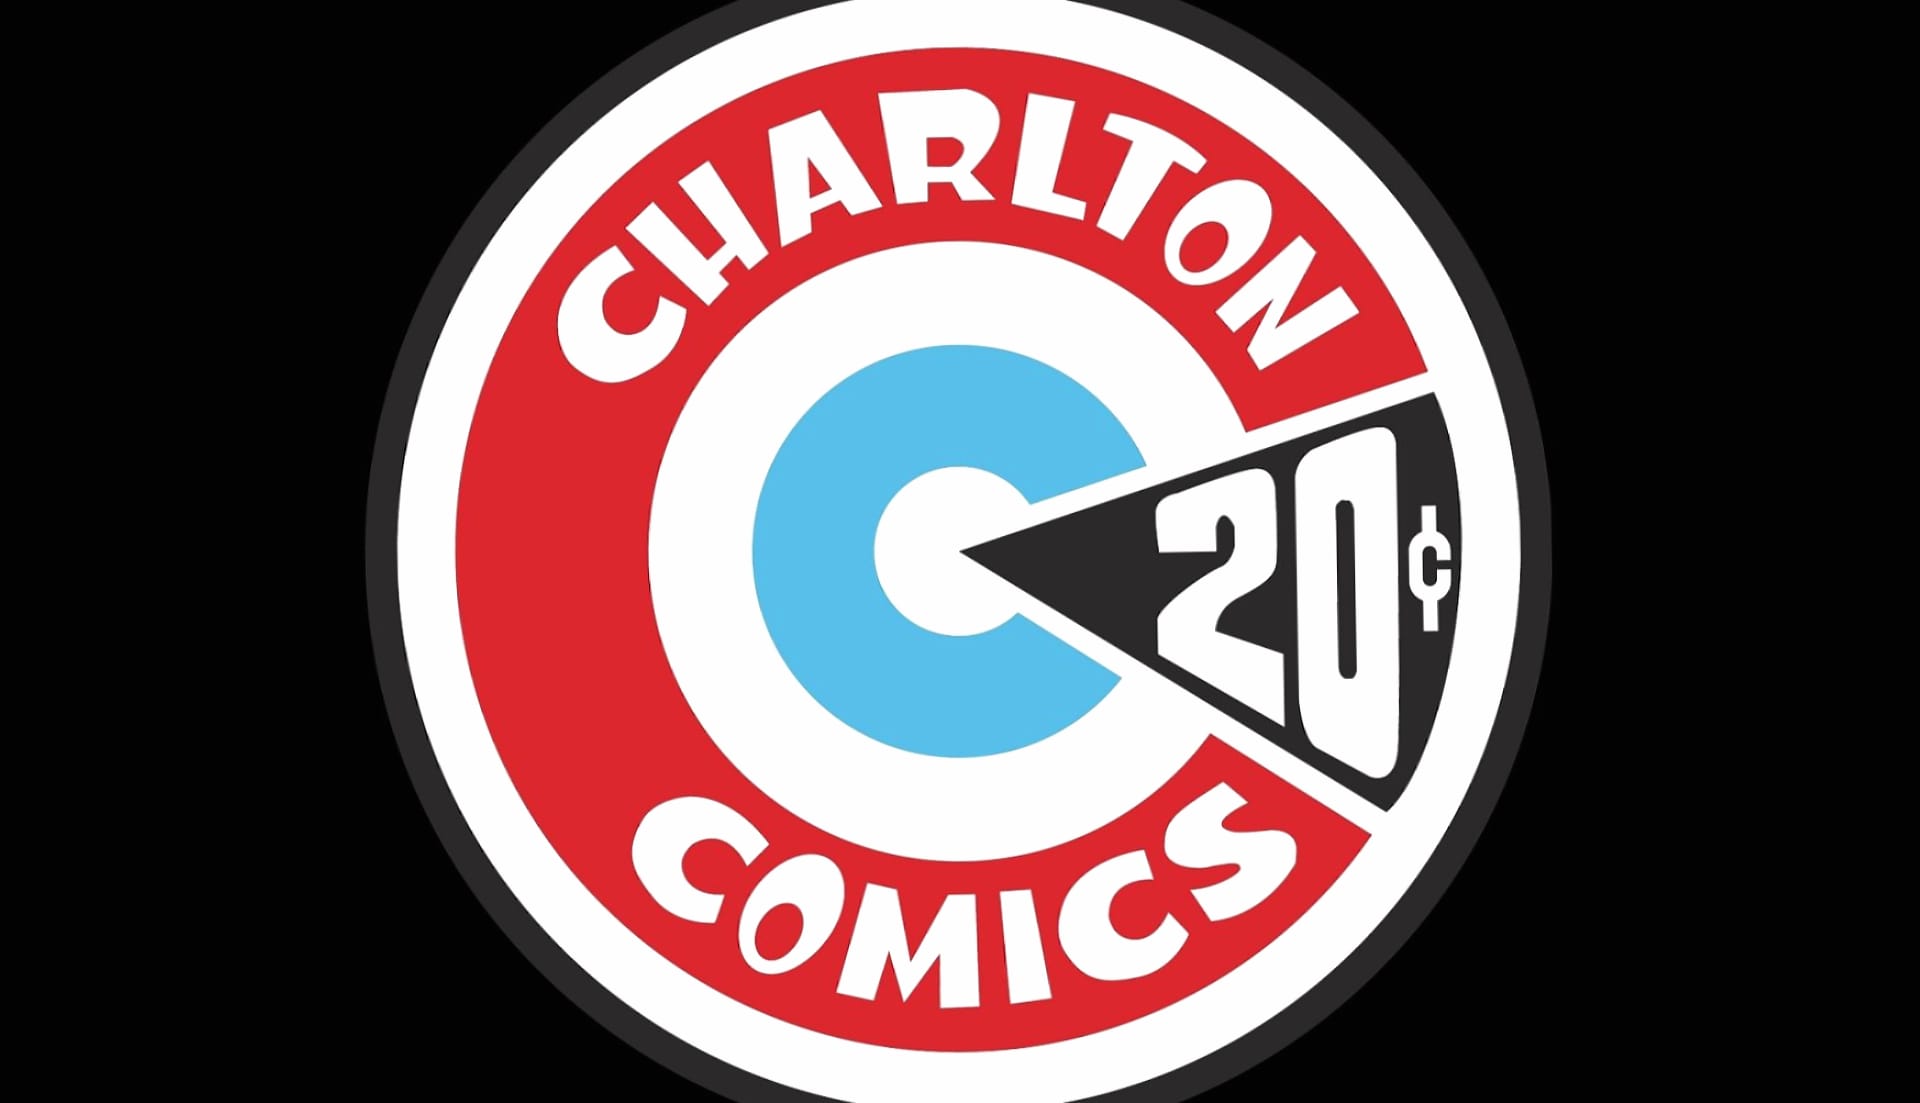 charlton Comics at 2048 x 2048 iPad size wallpapers HD quality